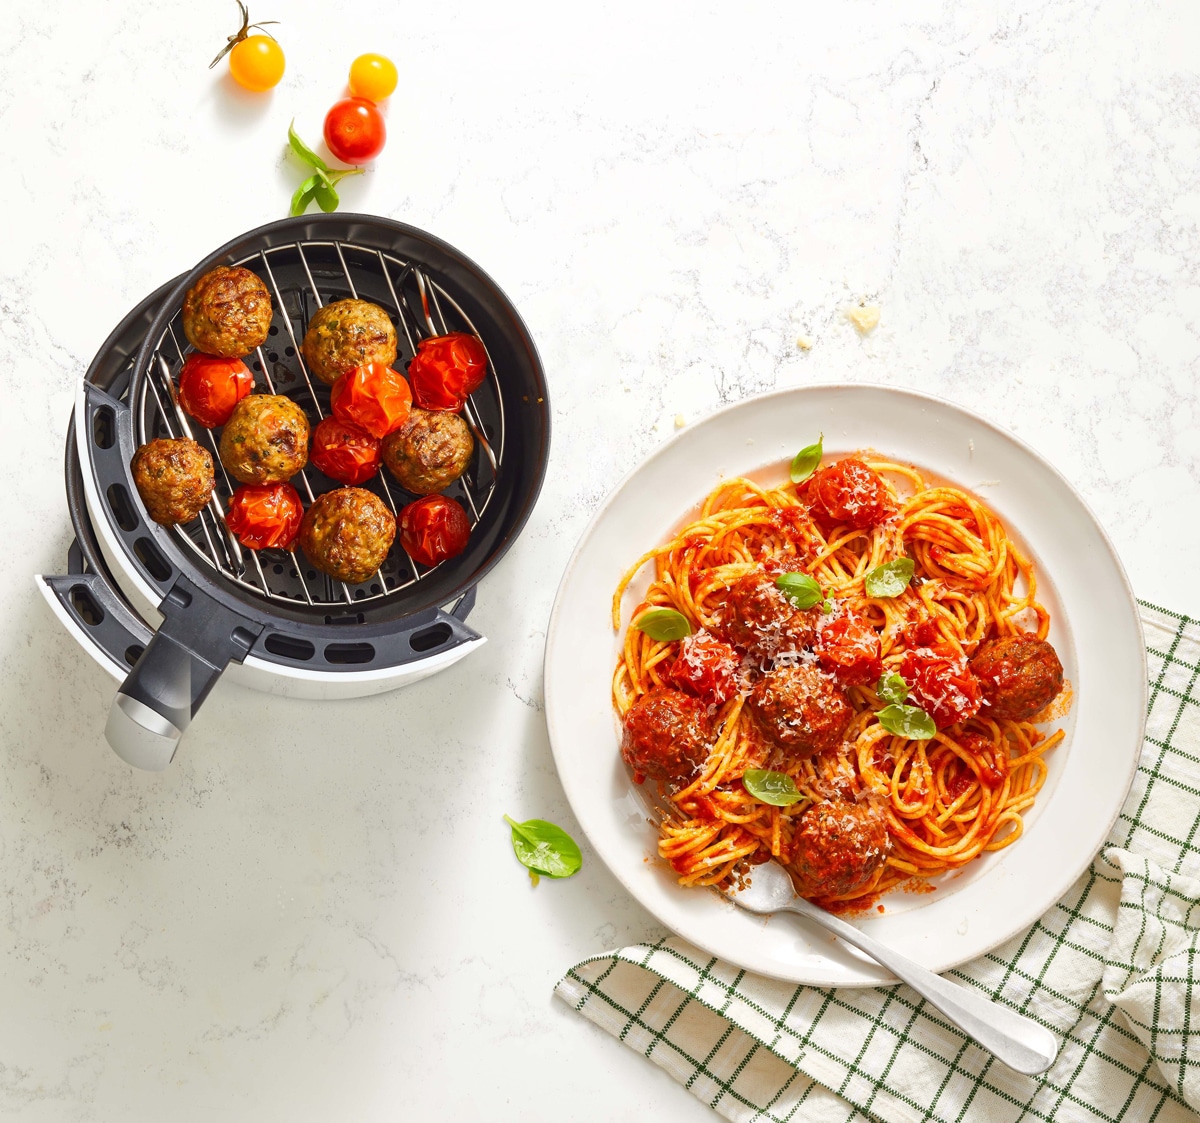 Spaghetti and air fryer meatballs